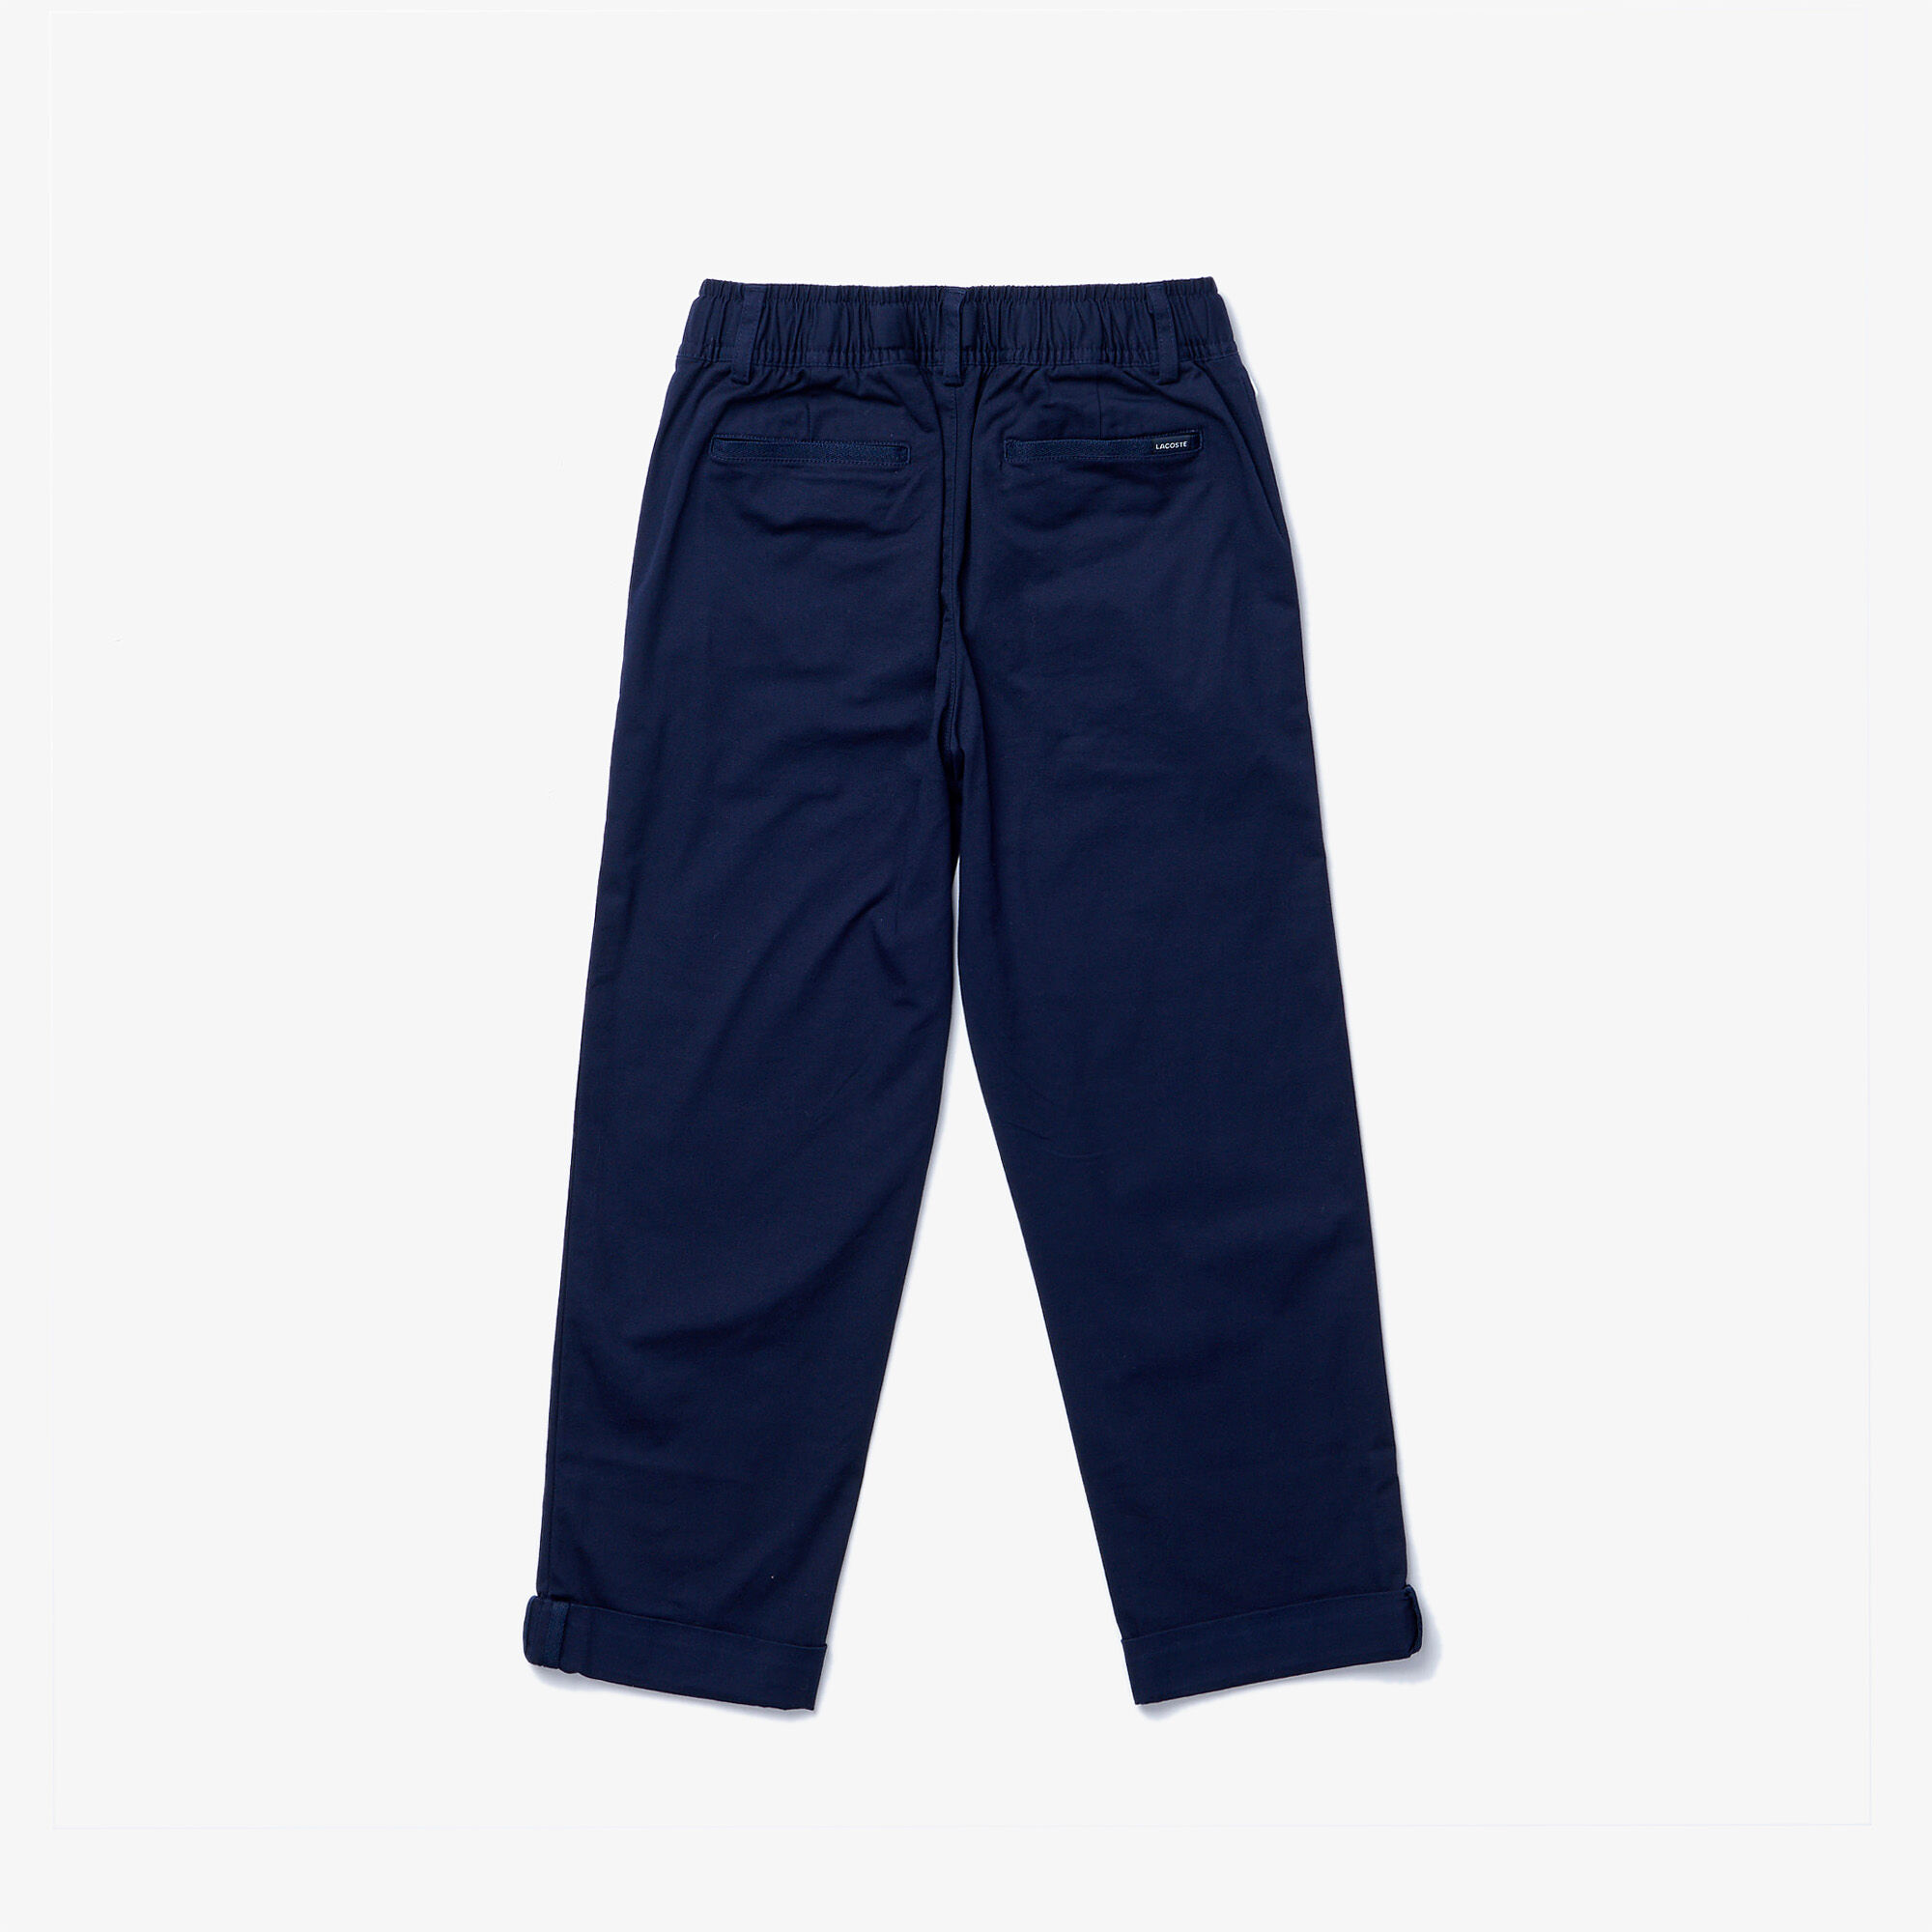 Boys’ Comfortable Lightweight Cotton Chino Pants